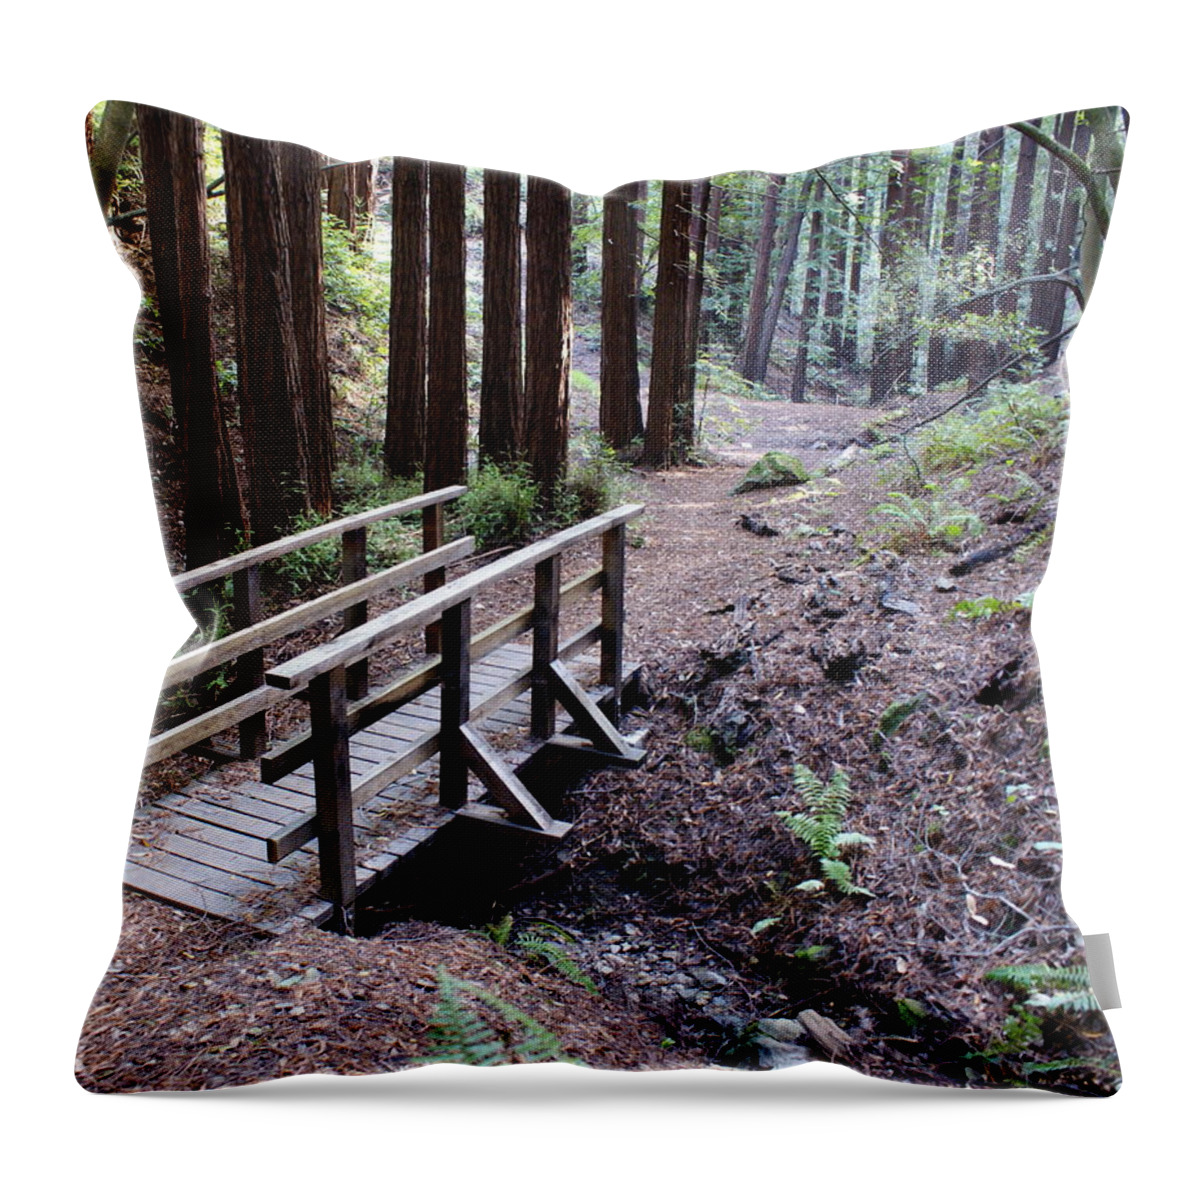 Mount Tamalpais Throw Pillow featuring the photograph Bridge in the Redwoods by Ben Upham III